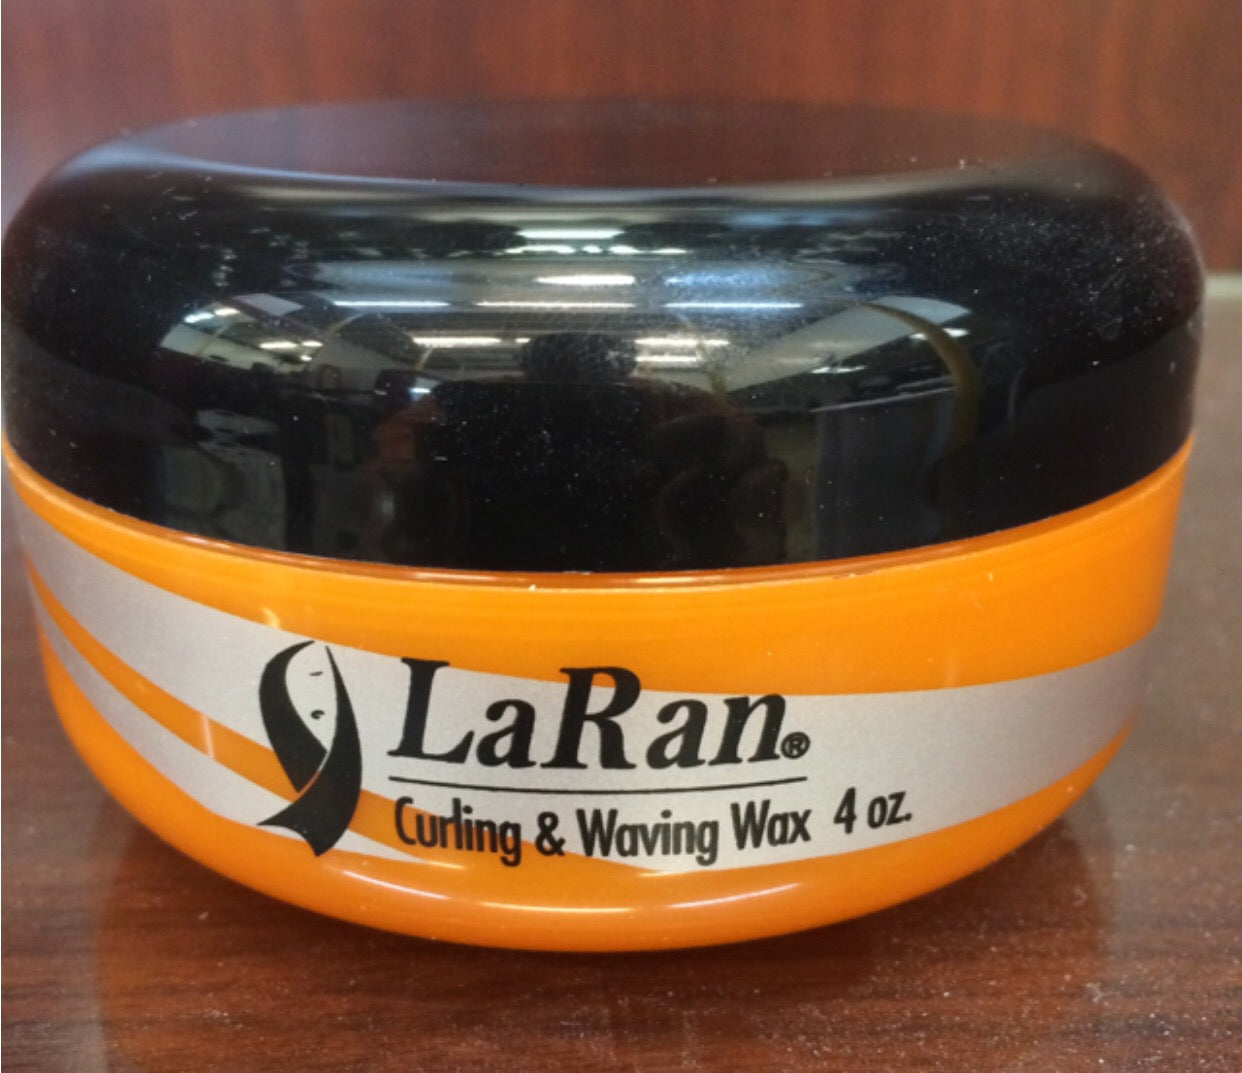 LaRan Curling and Waving Wax (4 oz)